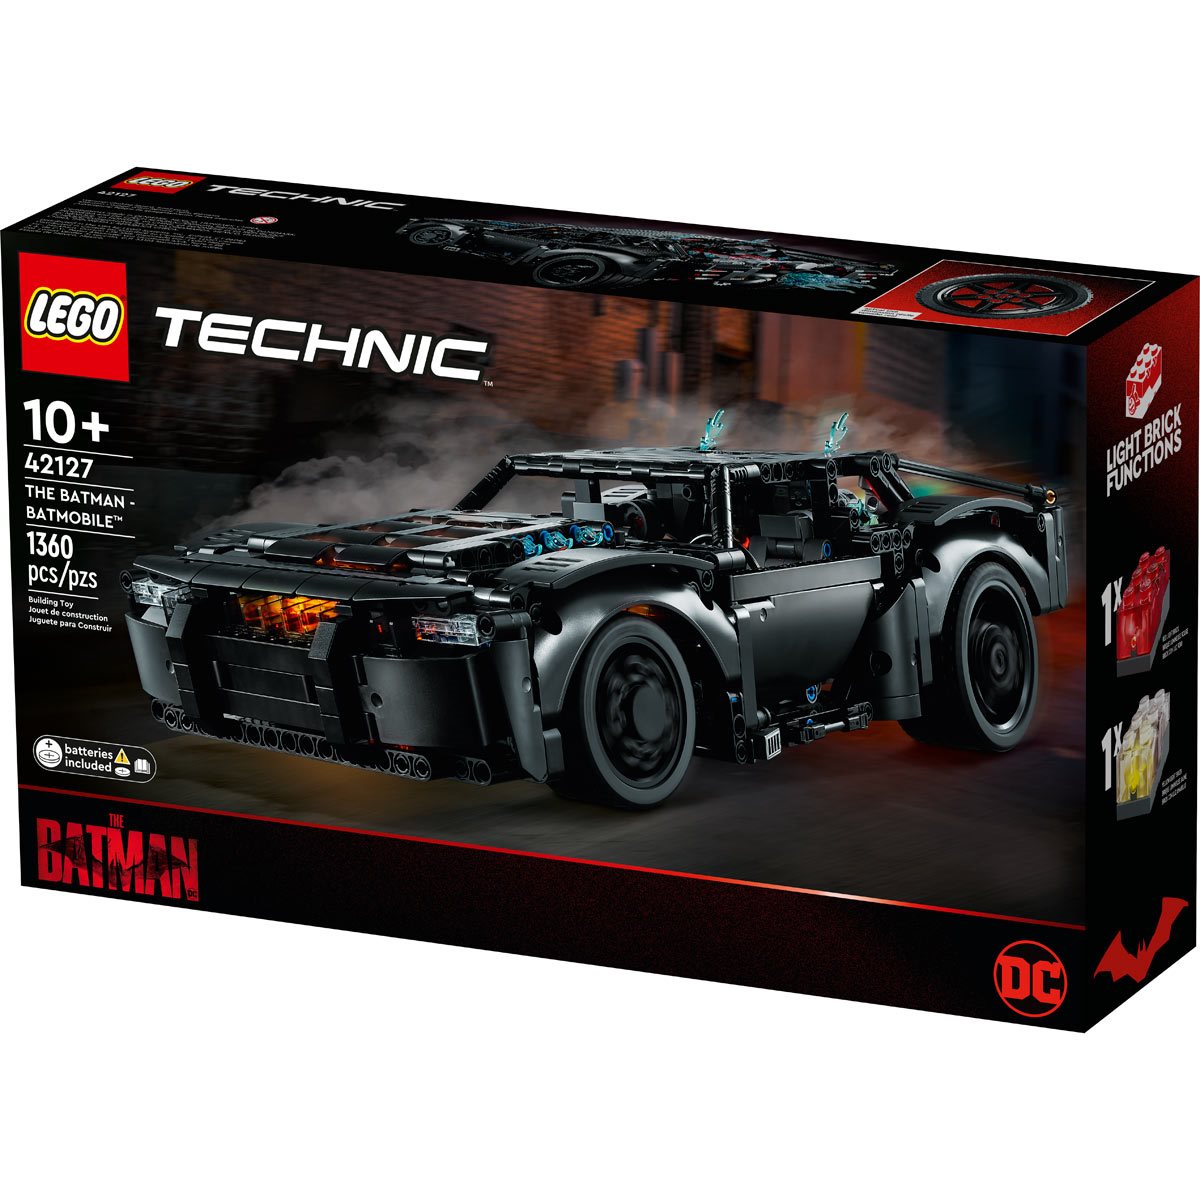 LEGO 42127 Technic The Batman Batmobile